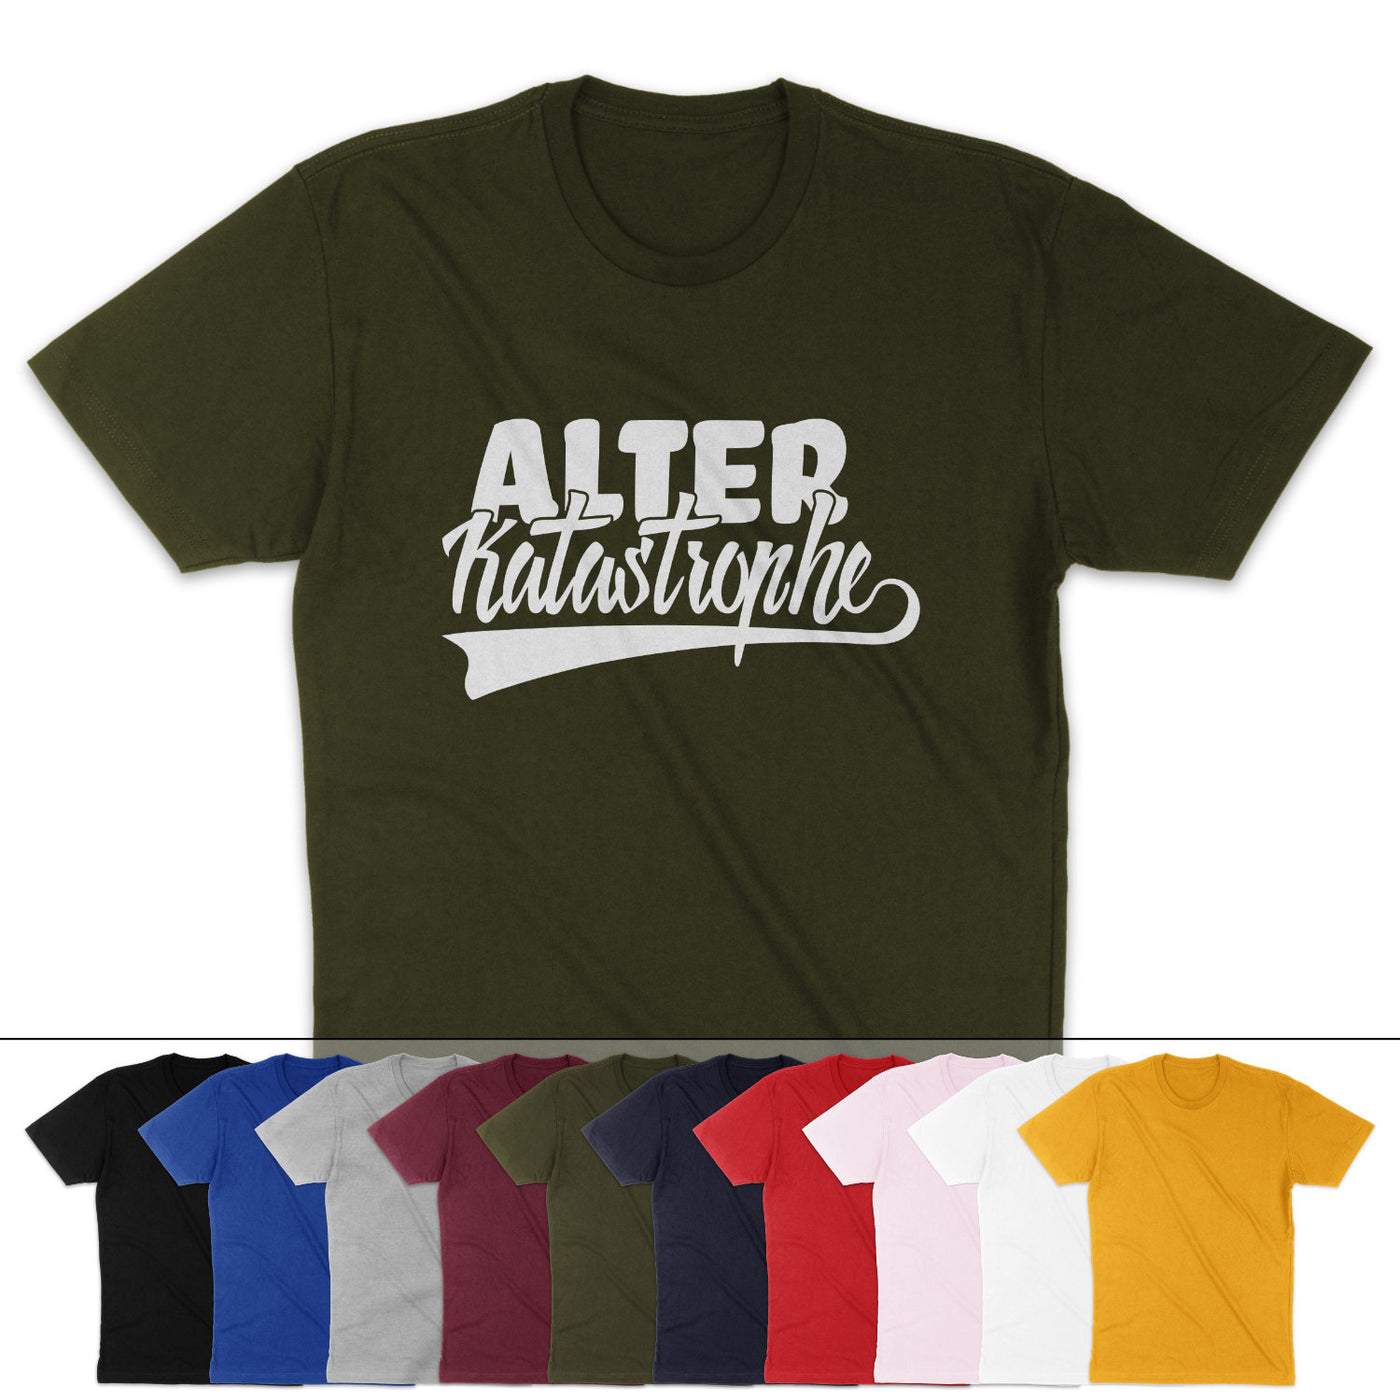 Alter Katastrophe Shirt Retro Vintage Kult Fun T-Shirt Sprüche